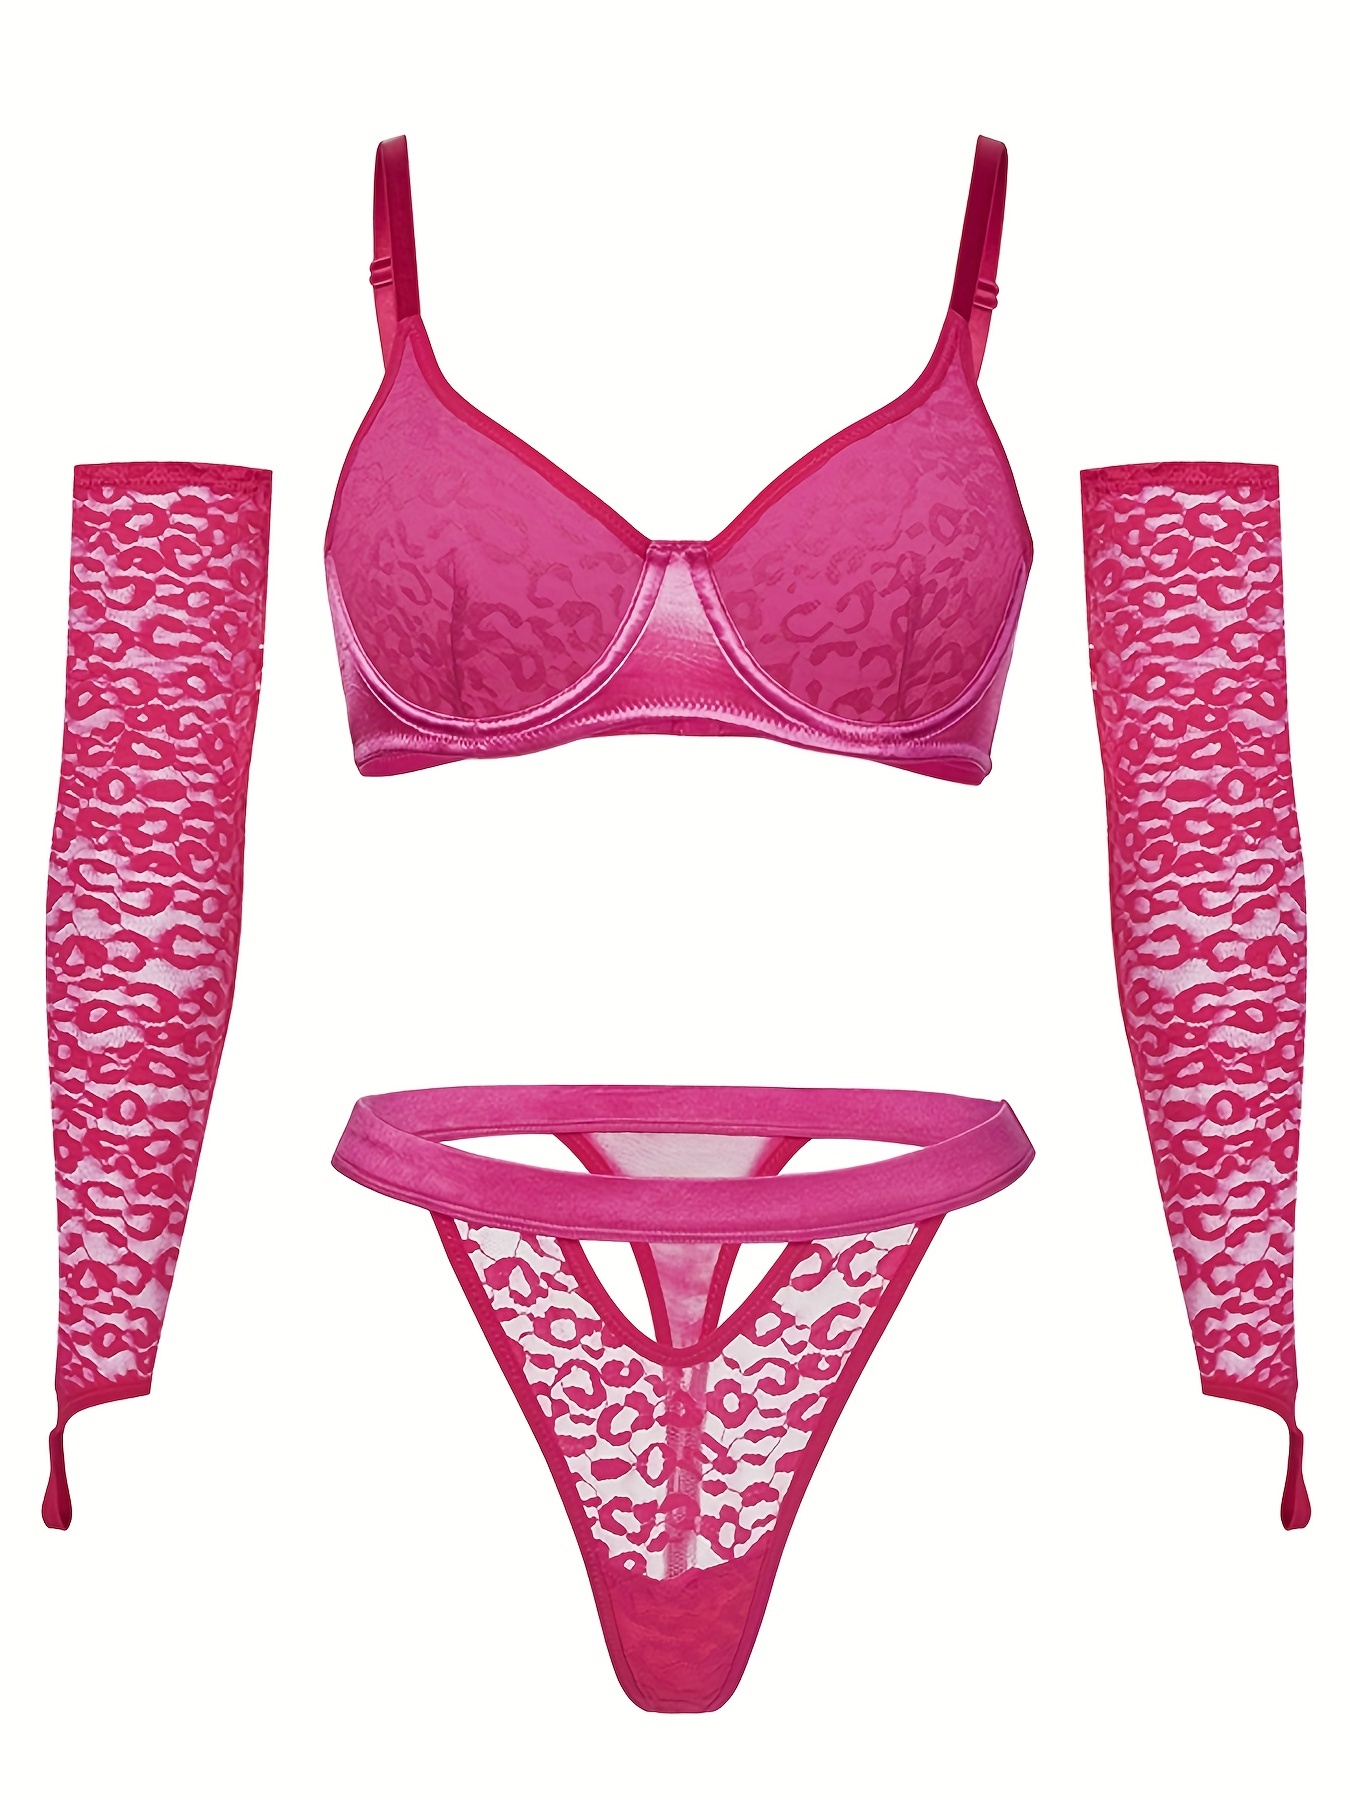 Contrast Lace Leopard Lingerie Set, Sultry Push Up Bra & Bow Tie Thong,  Women's Sexy Lingerie & Underwear